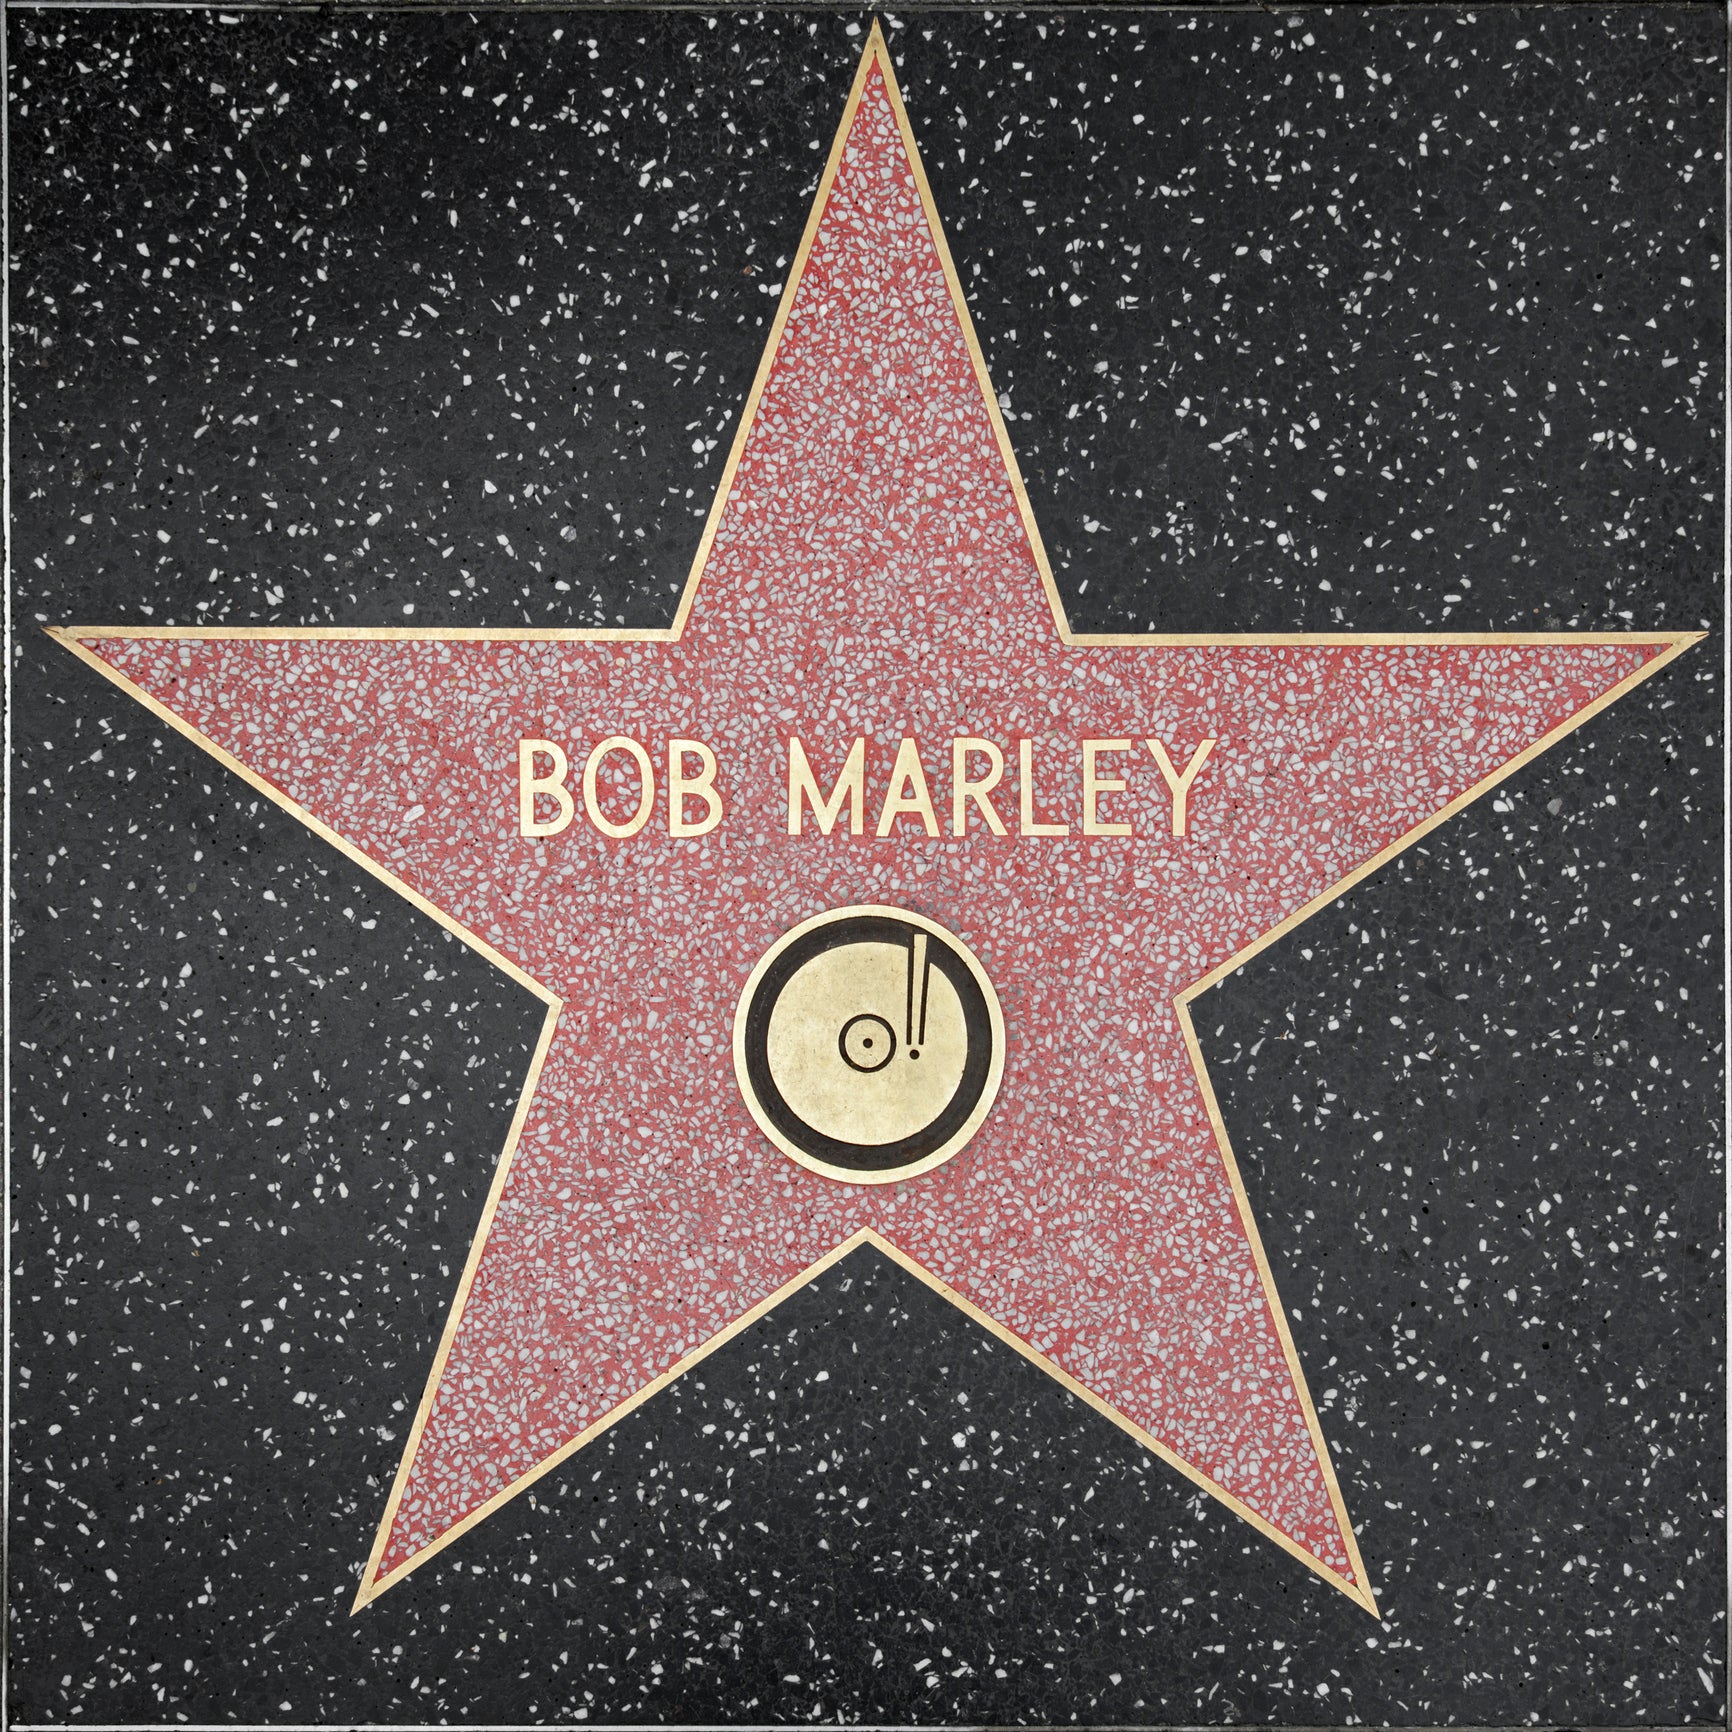 Bob Marley's Other Legacy: Skin Cancer Awareness